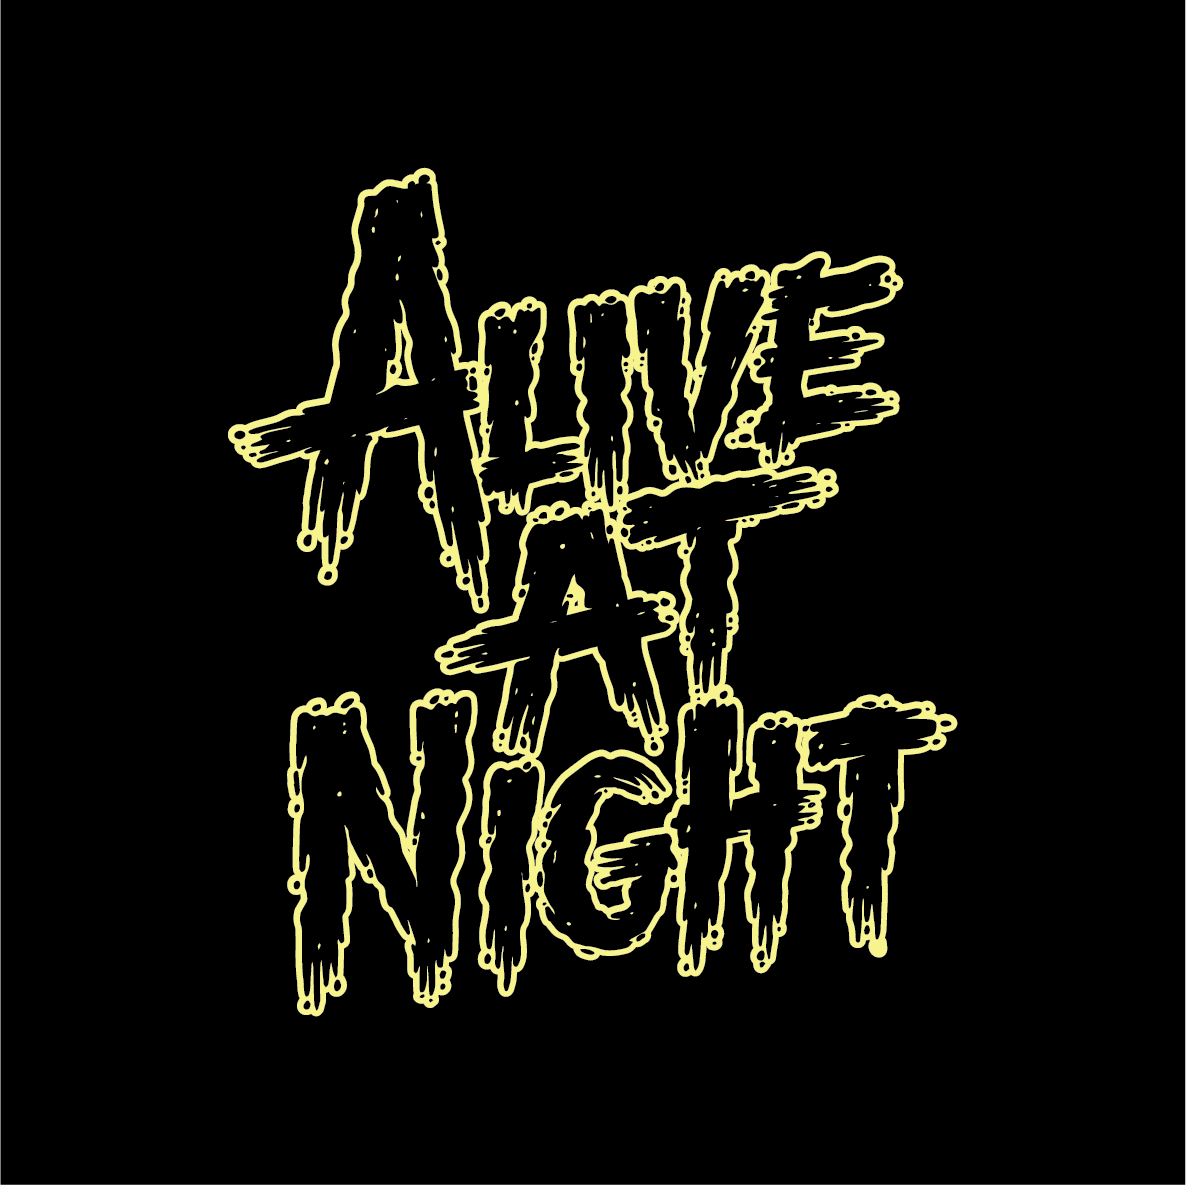 tonight alive logo transparent